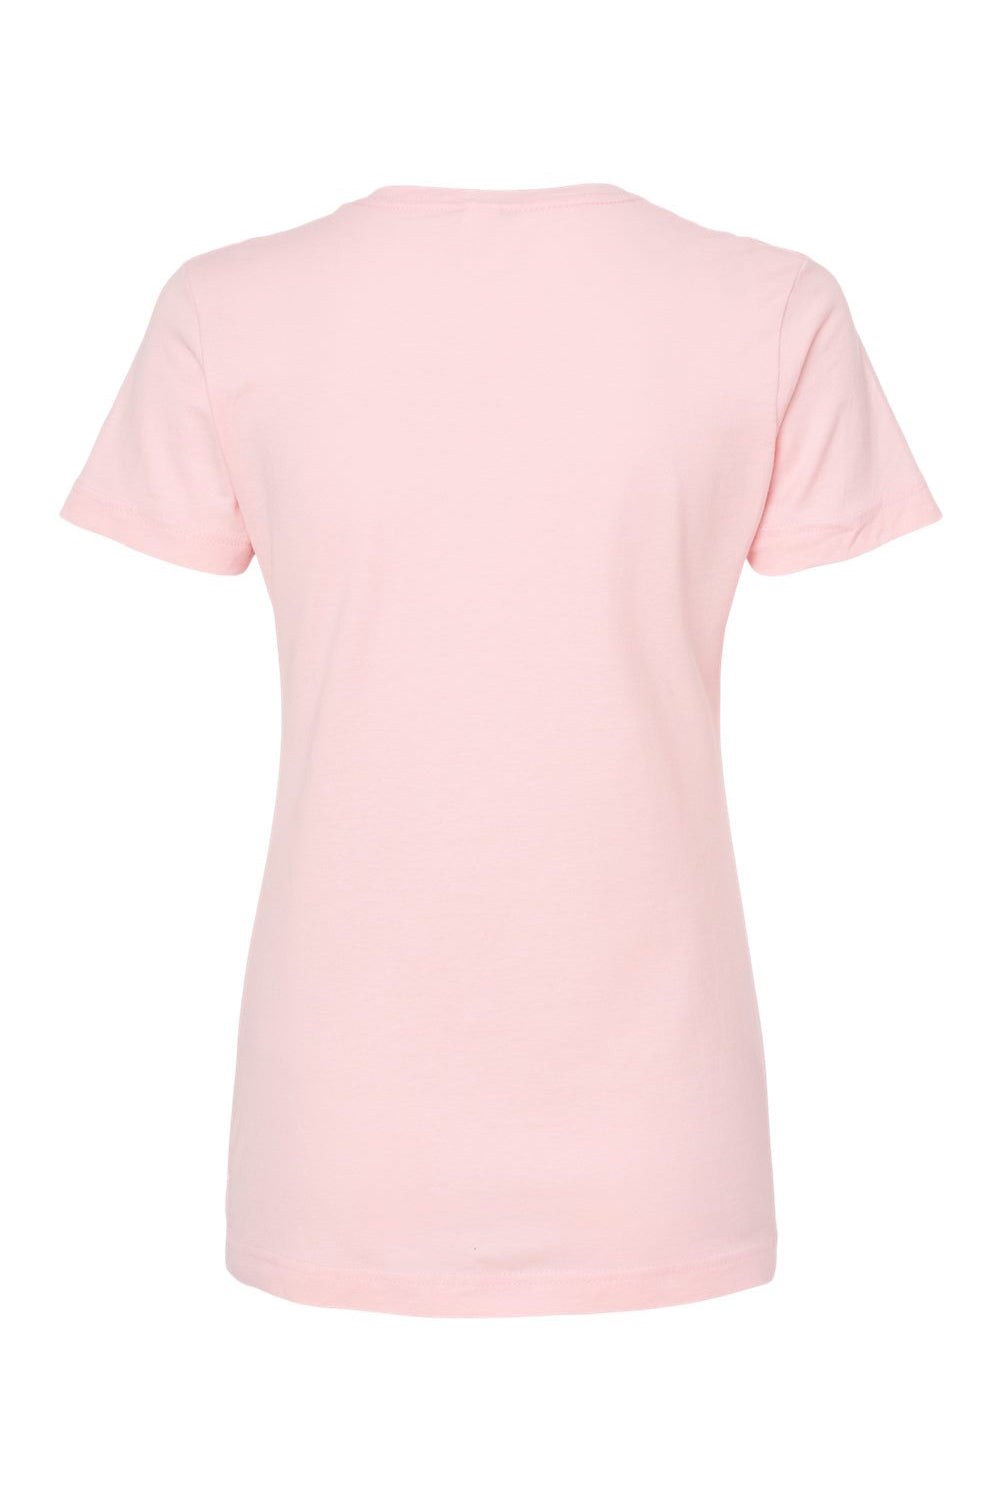 Tultex 216 Womens Fine Jersey Classic Fit Short Sleeve Crewneck T-Shirt Pink Flat Back